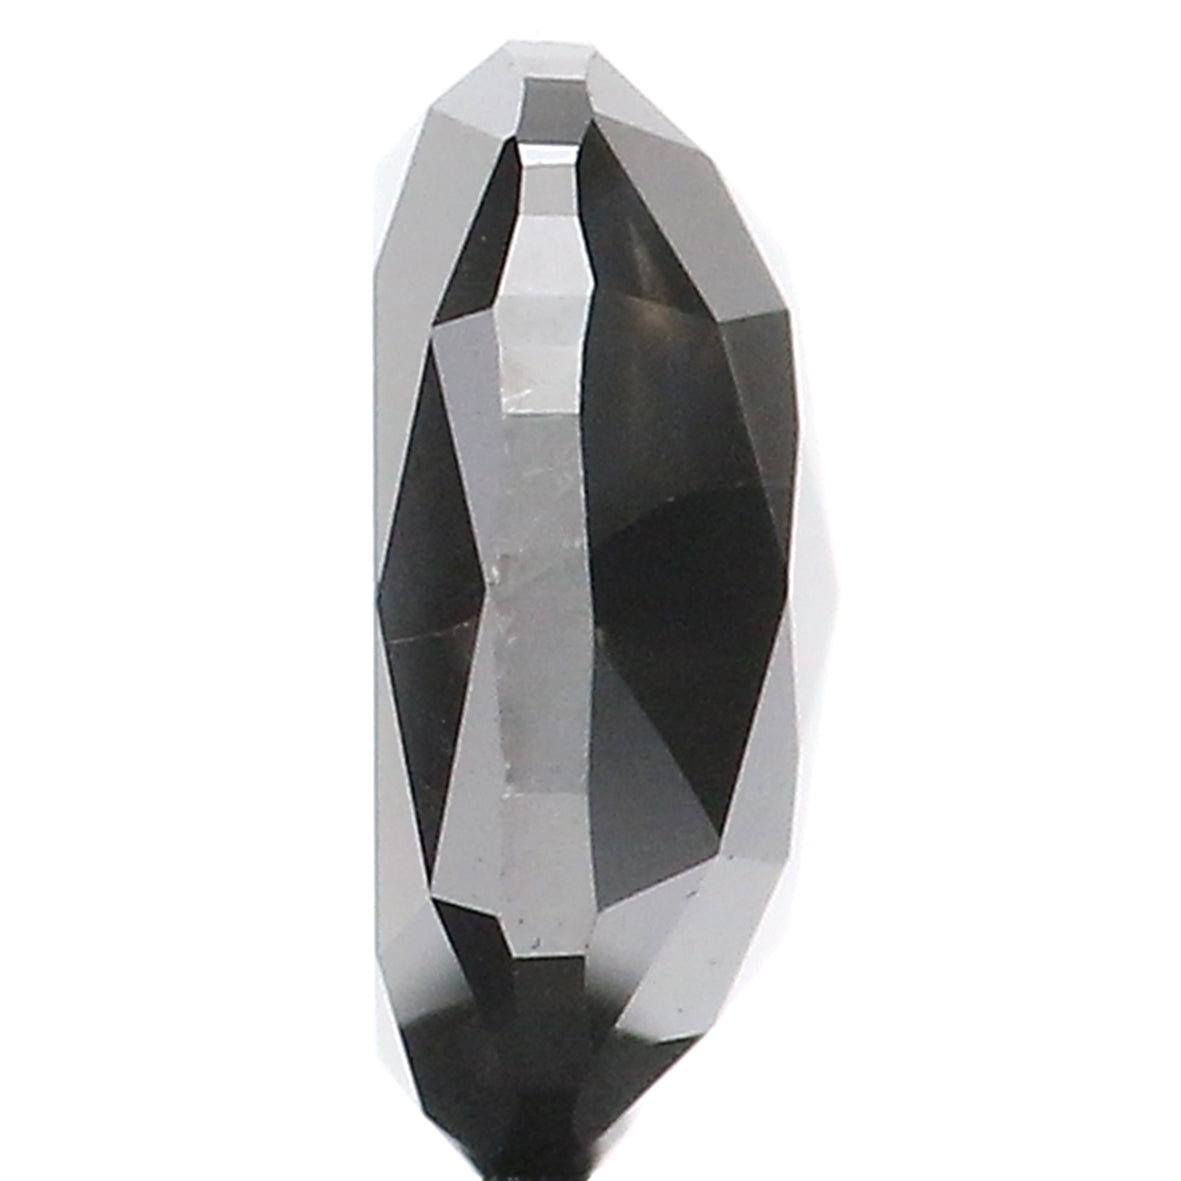 1.54 CT IGI Certified Natural Loose Cushion Modified Brilliant Cut Diamond Natural Black Color Diamond 7.15 MM Cushion Shape Diamond QL9398